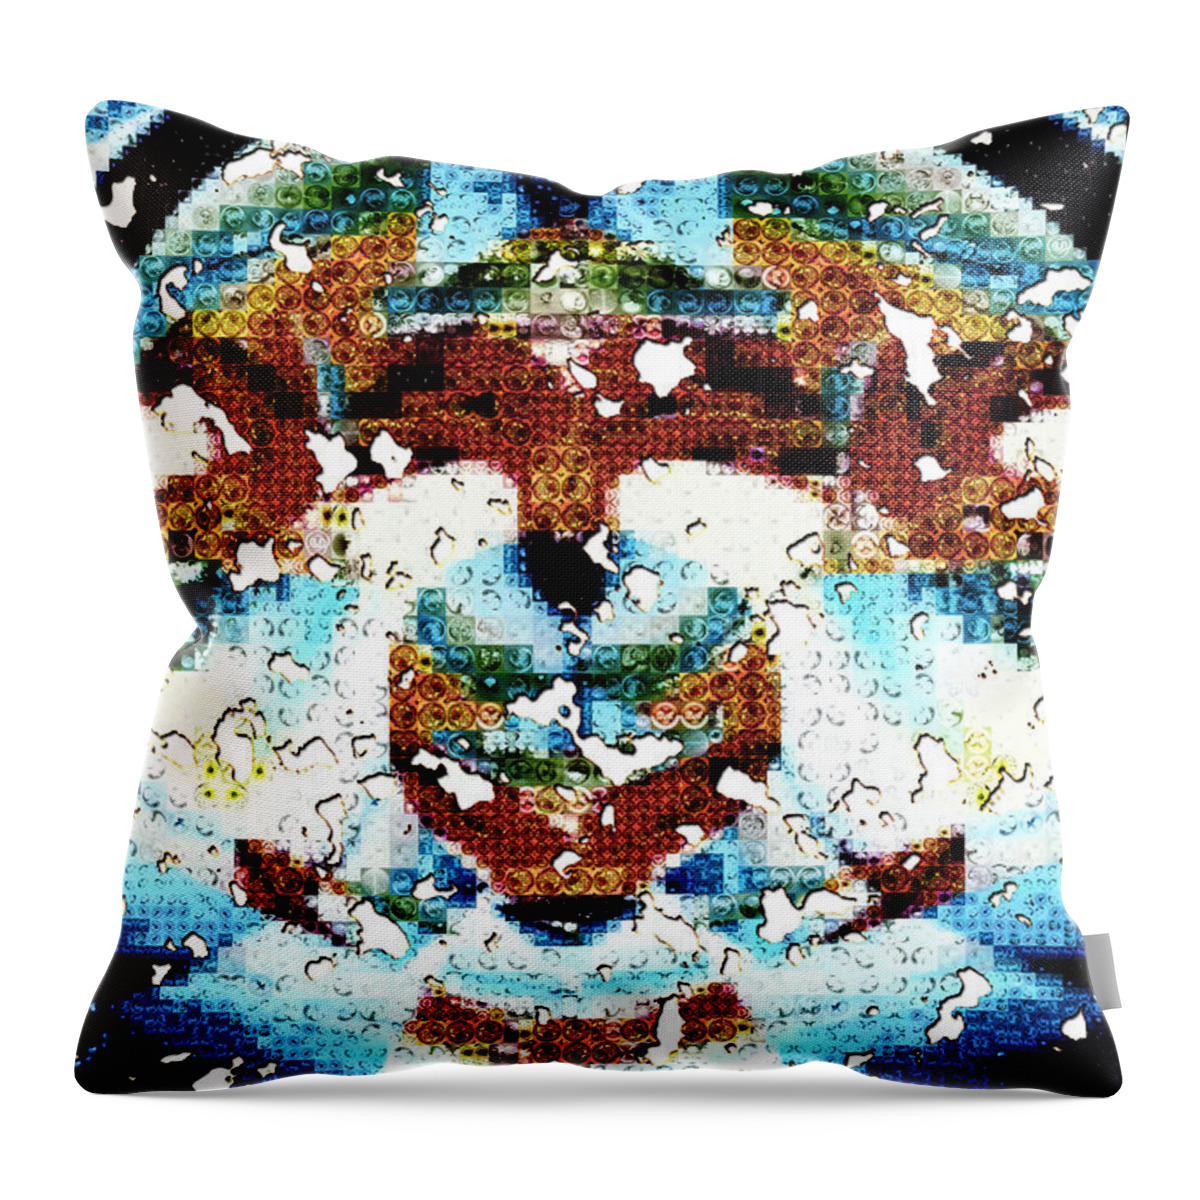 Paula Ayers Throw Pillow featuring the digital art Those Darn Moths Mosaic by Paula Ayers